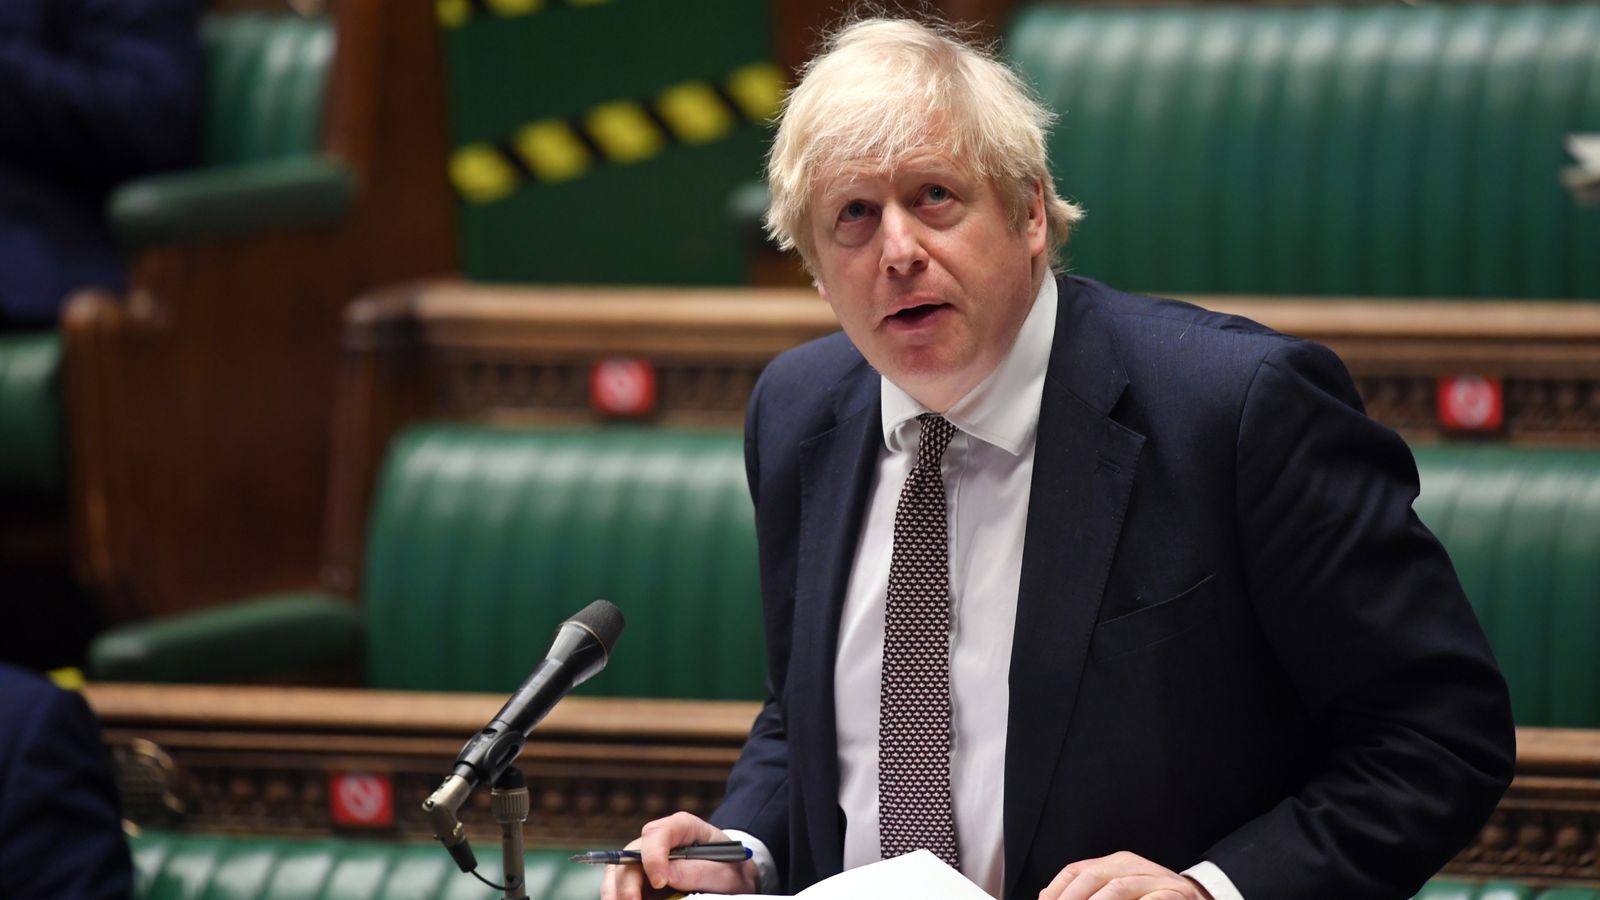 Boris Johnson said that the vaccination program in the UK will go 24/7 soon